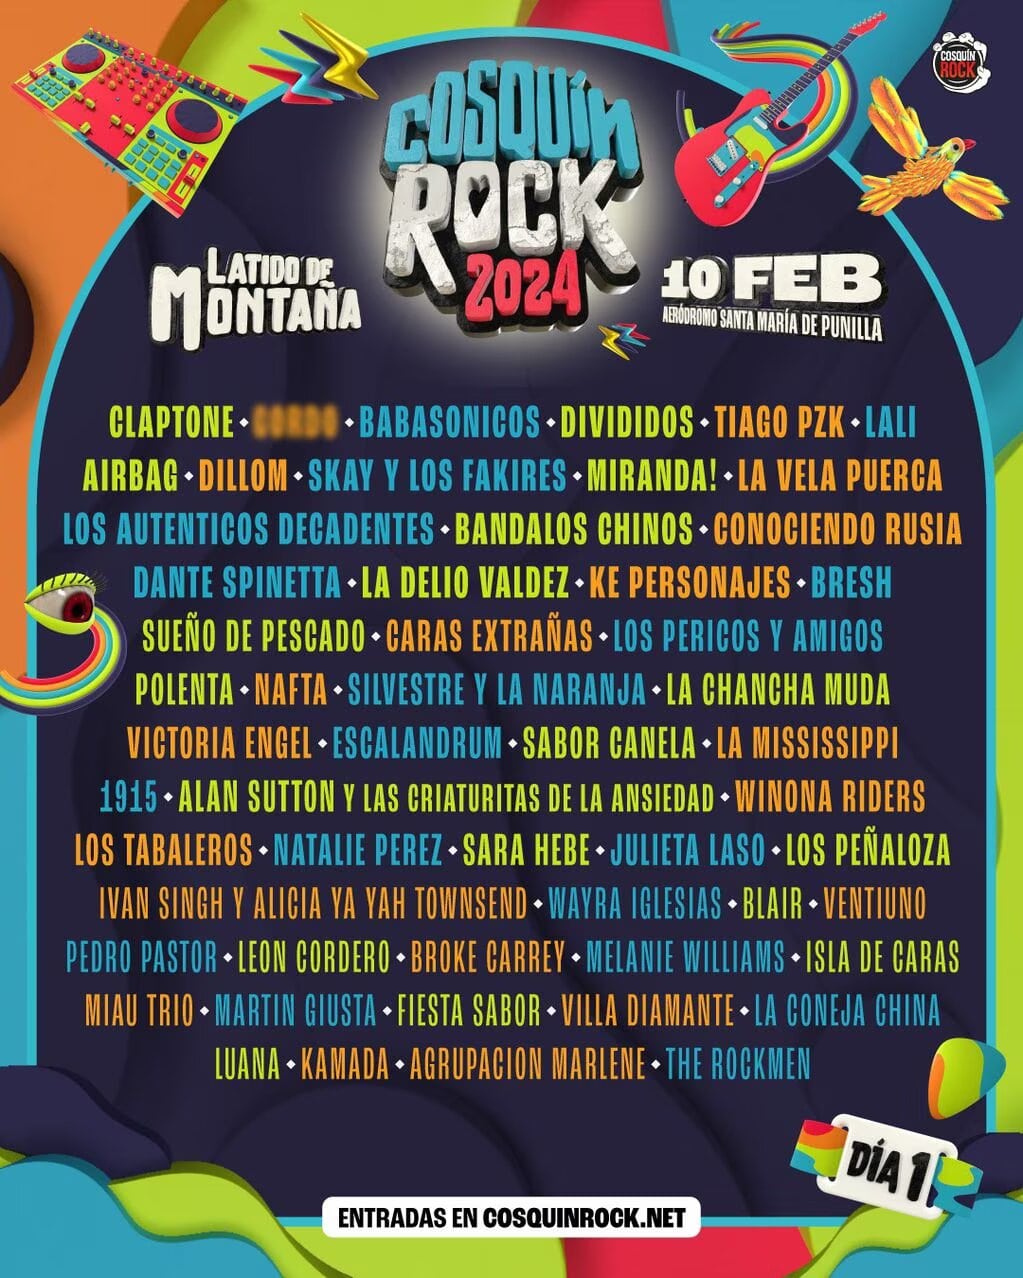 Se viene el Cosquín Rock 2024: Slash, Steve Aoki, Duki, Lali y sorpresas imperdibles